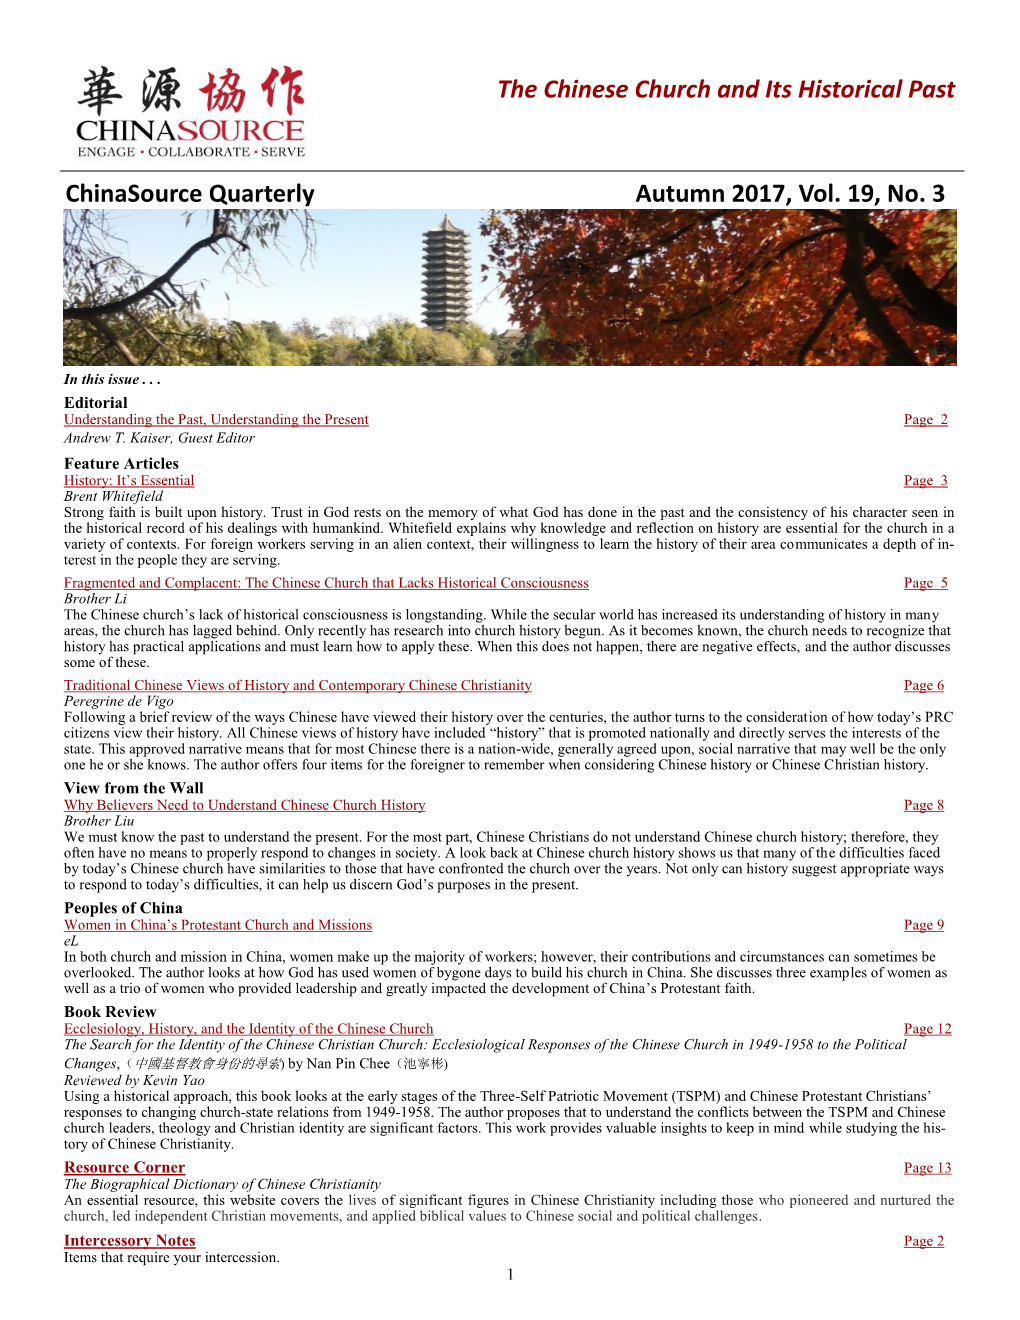 Chinasource Quarterly Autumn 2017, Vol. 19, No. 3 the Chinese Church